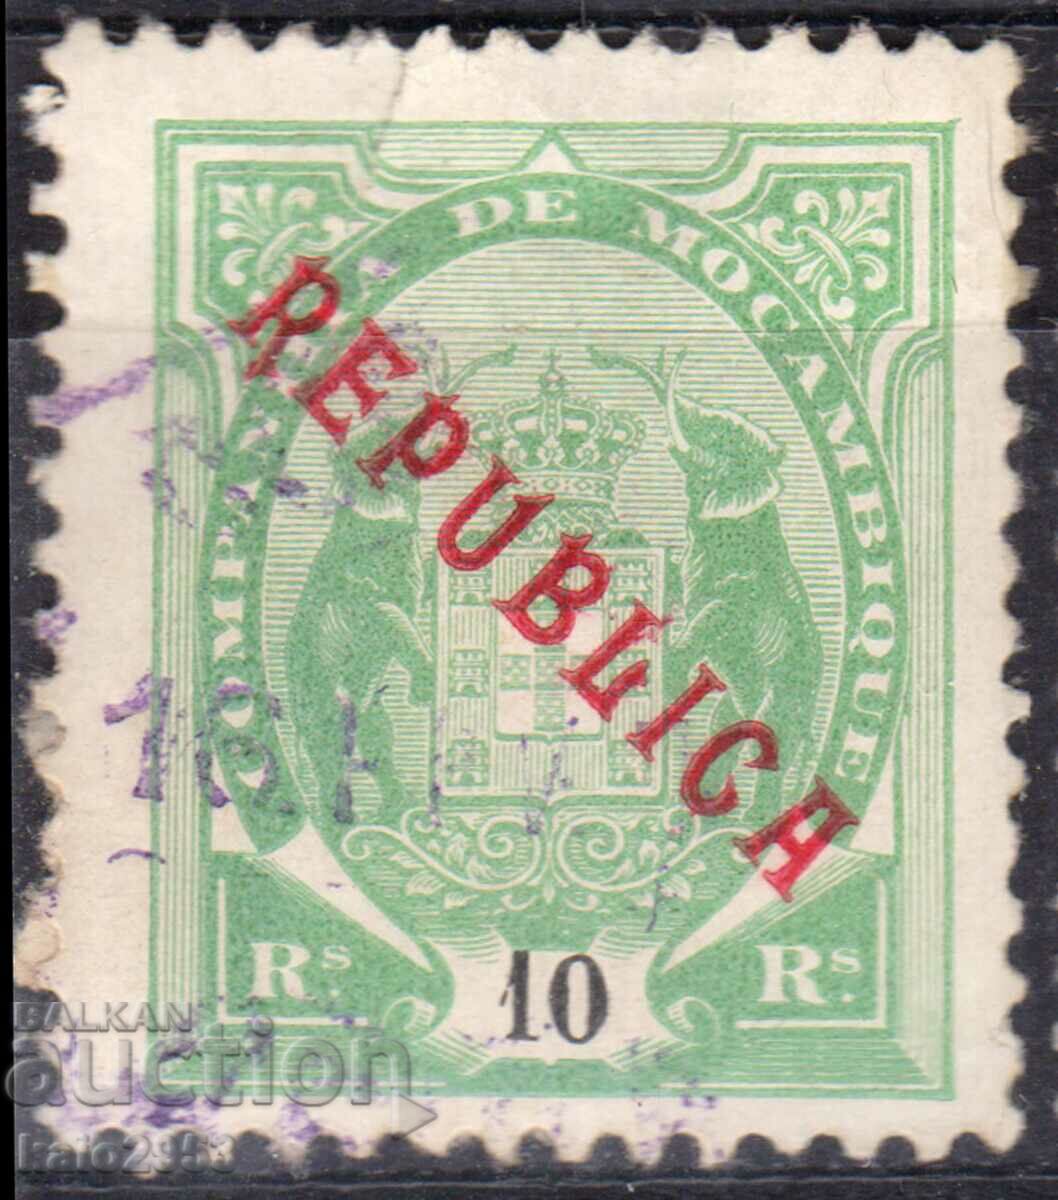 Mozambique Company-1911-Regular-Οικόσημο με επιγραφή "REPUBLICA", σφραγίδα